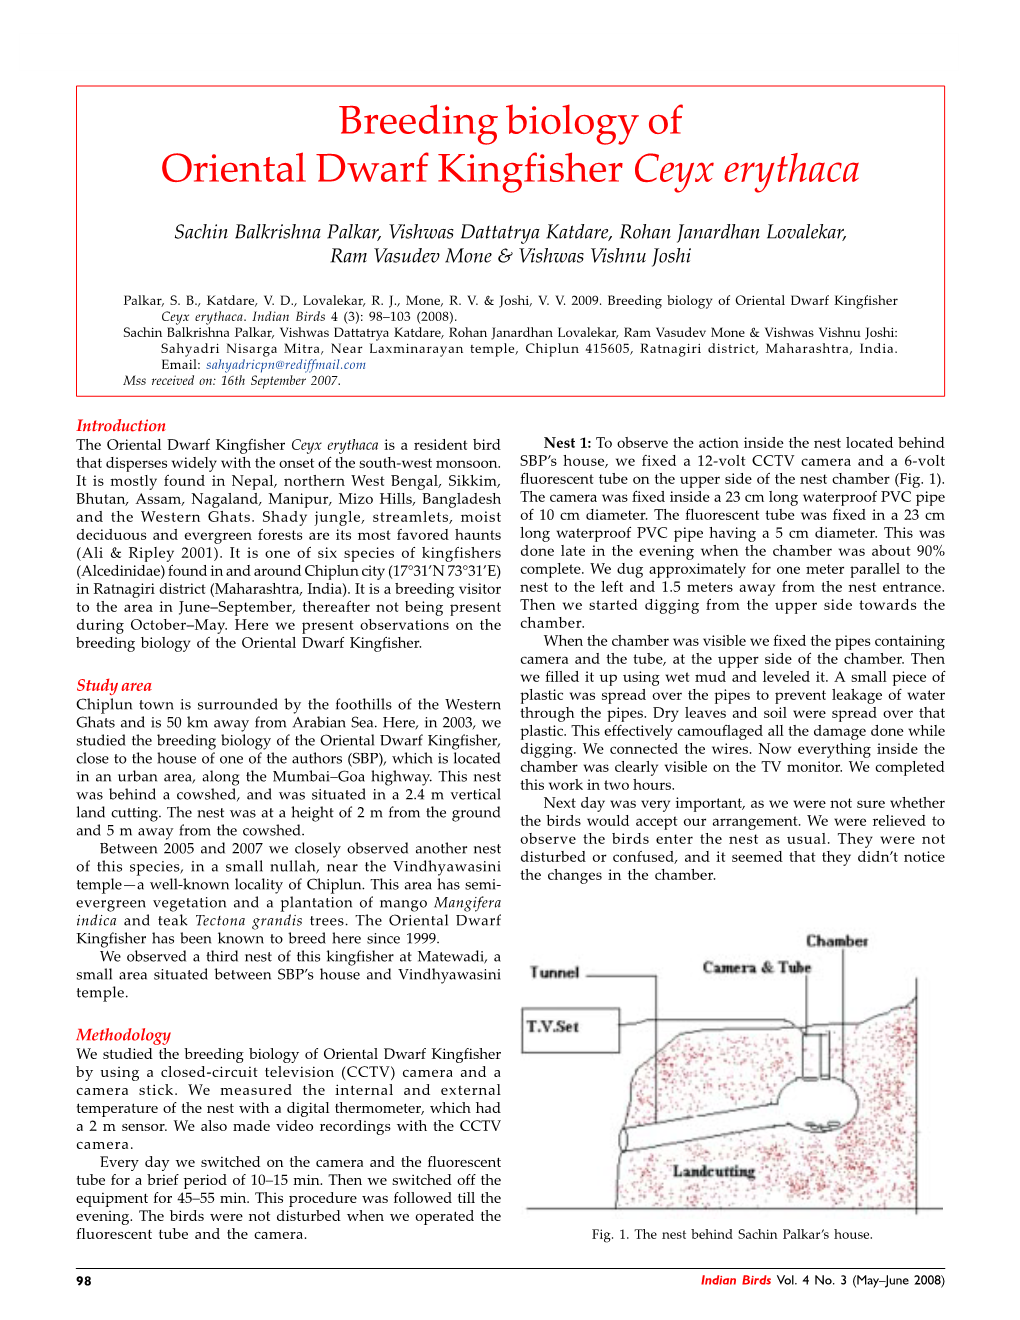 Breeding Biology of Oriental Dwarf Kingfisher Ceyx Erythaca